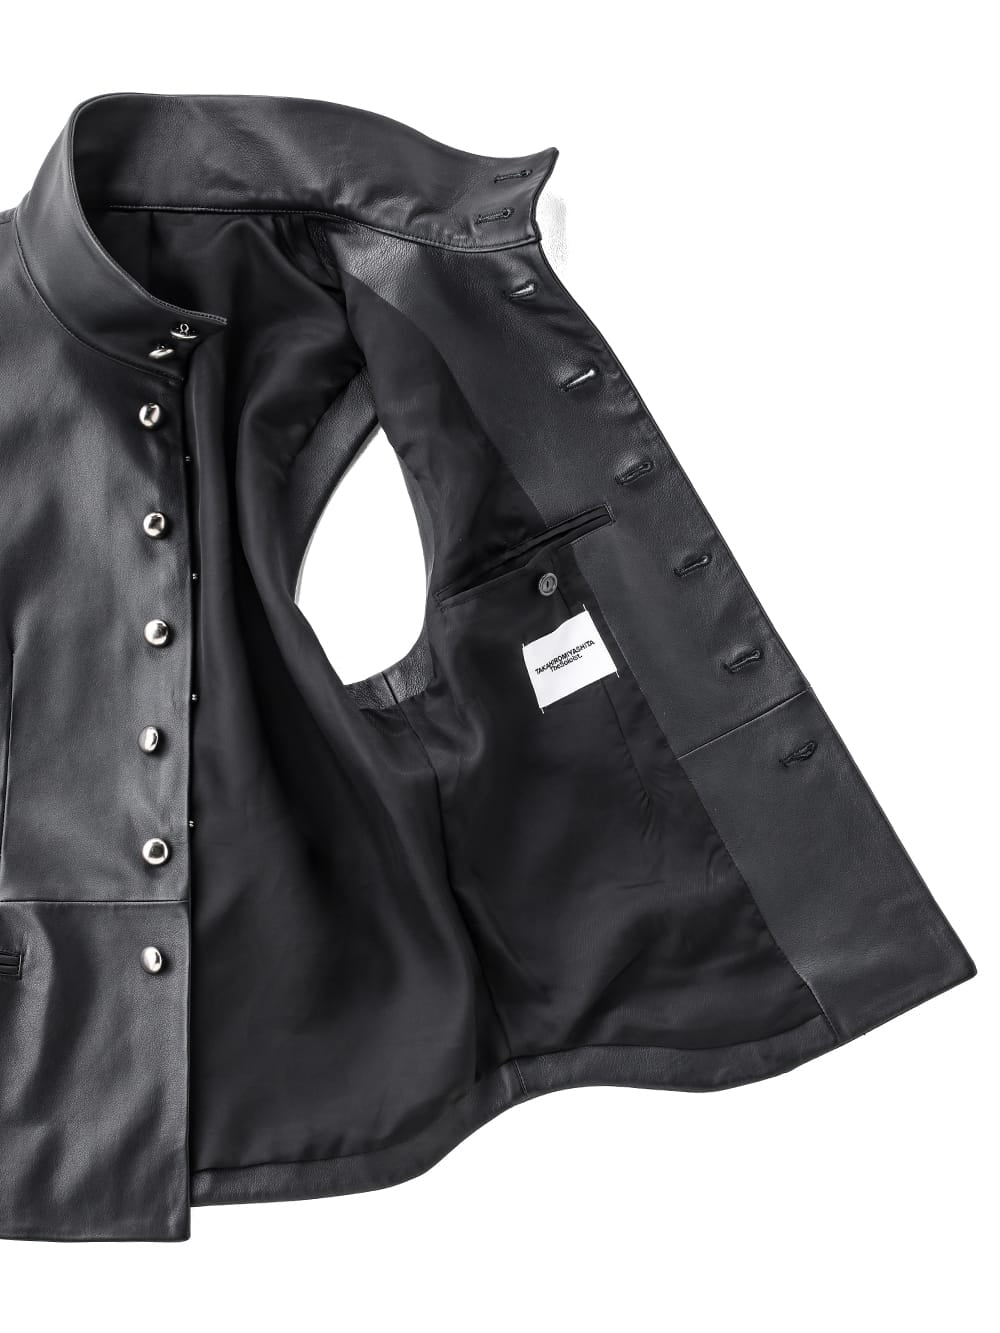 right - left sleeveless victorian jacket.(smooth）